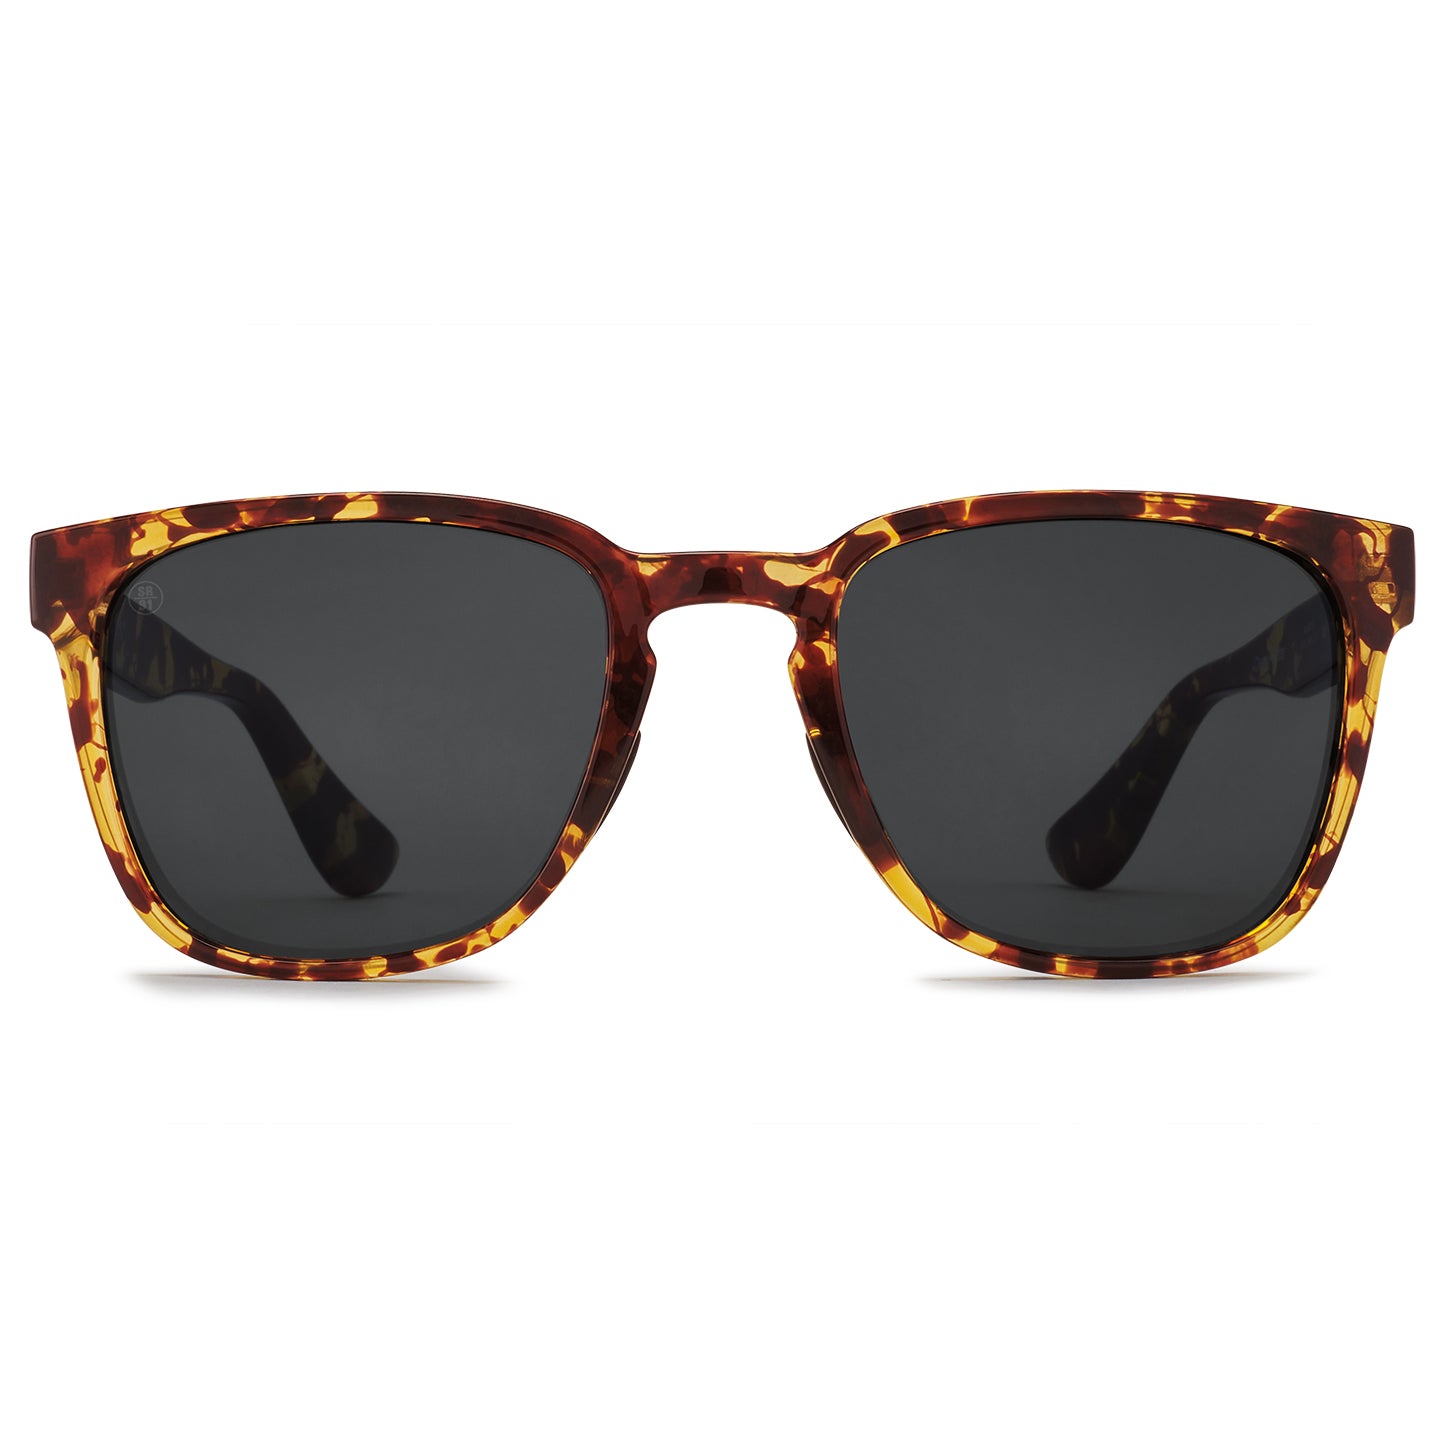 Avalon Polarized Sunglasses